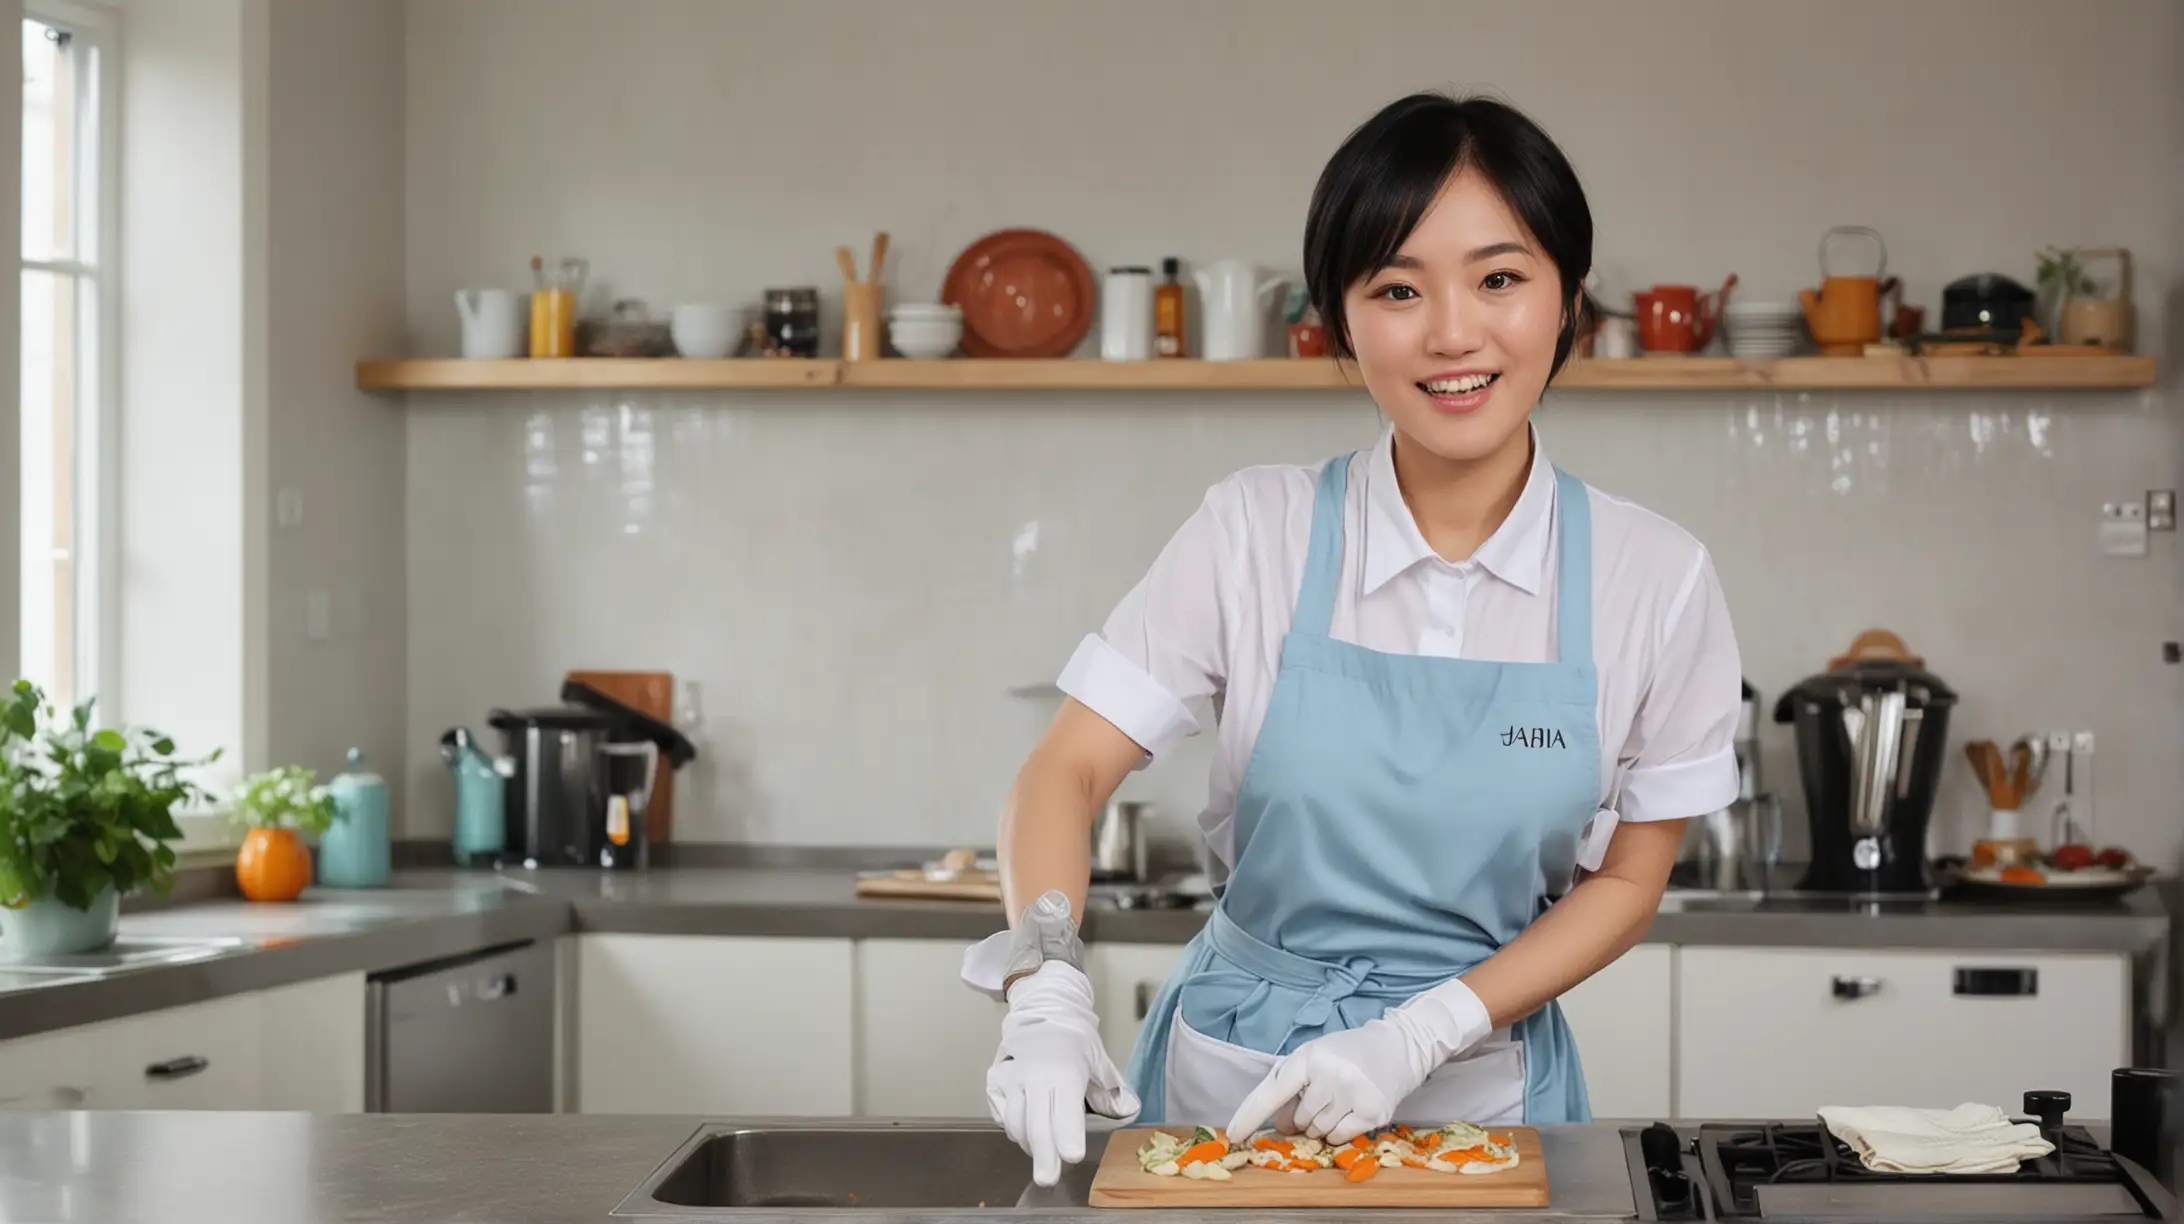 Joyful Jada House Chinese Housekeeper Cooking in Spacious Kitchen